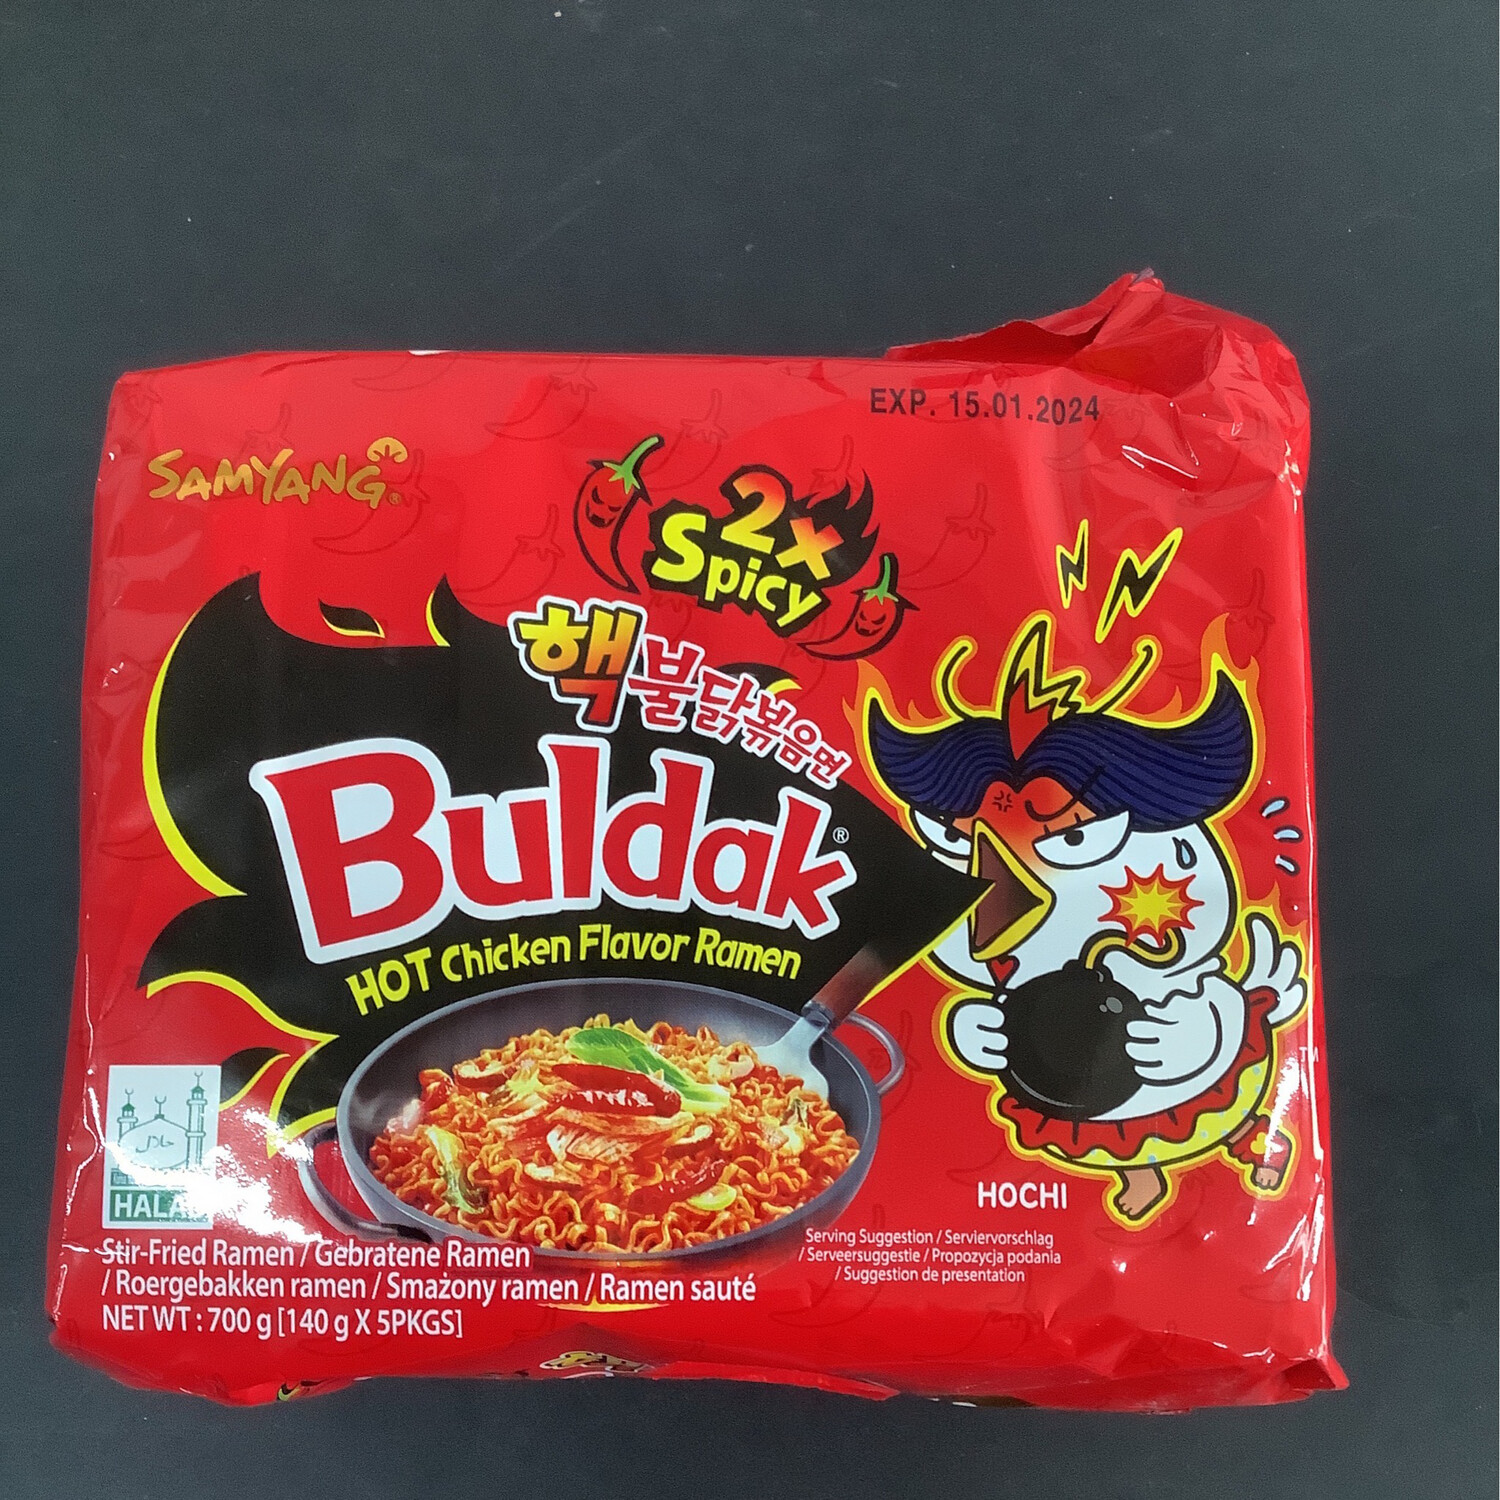 Samyang Buldak hot chicken flavor ramen 2x spicy